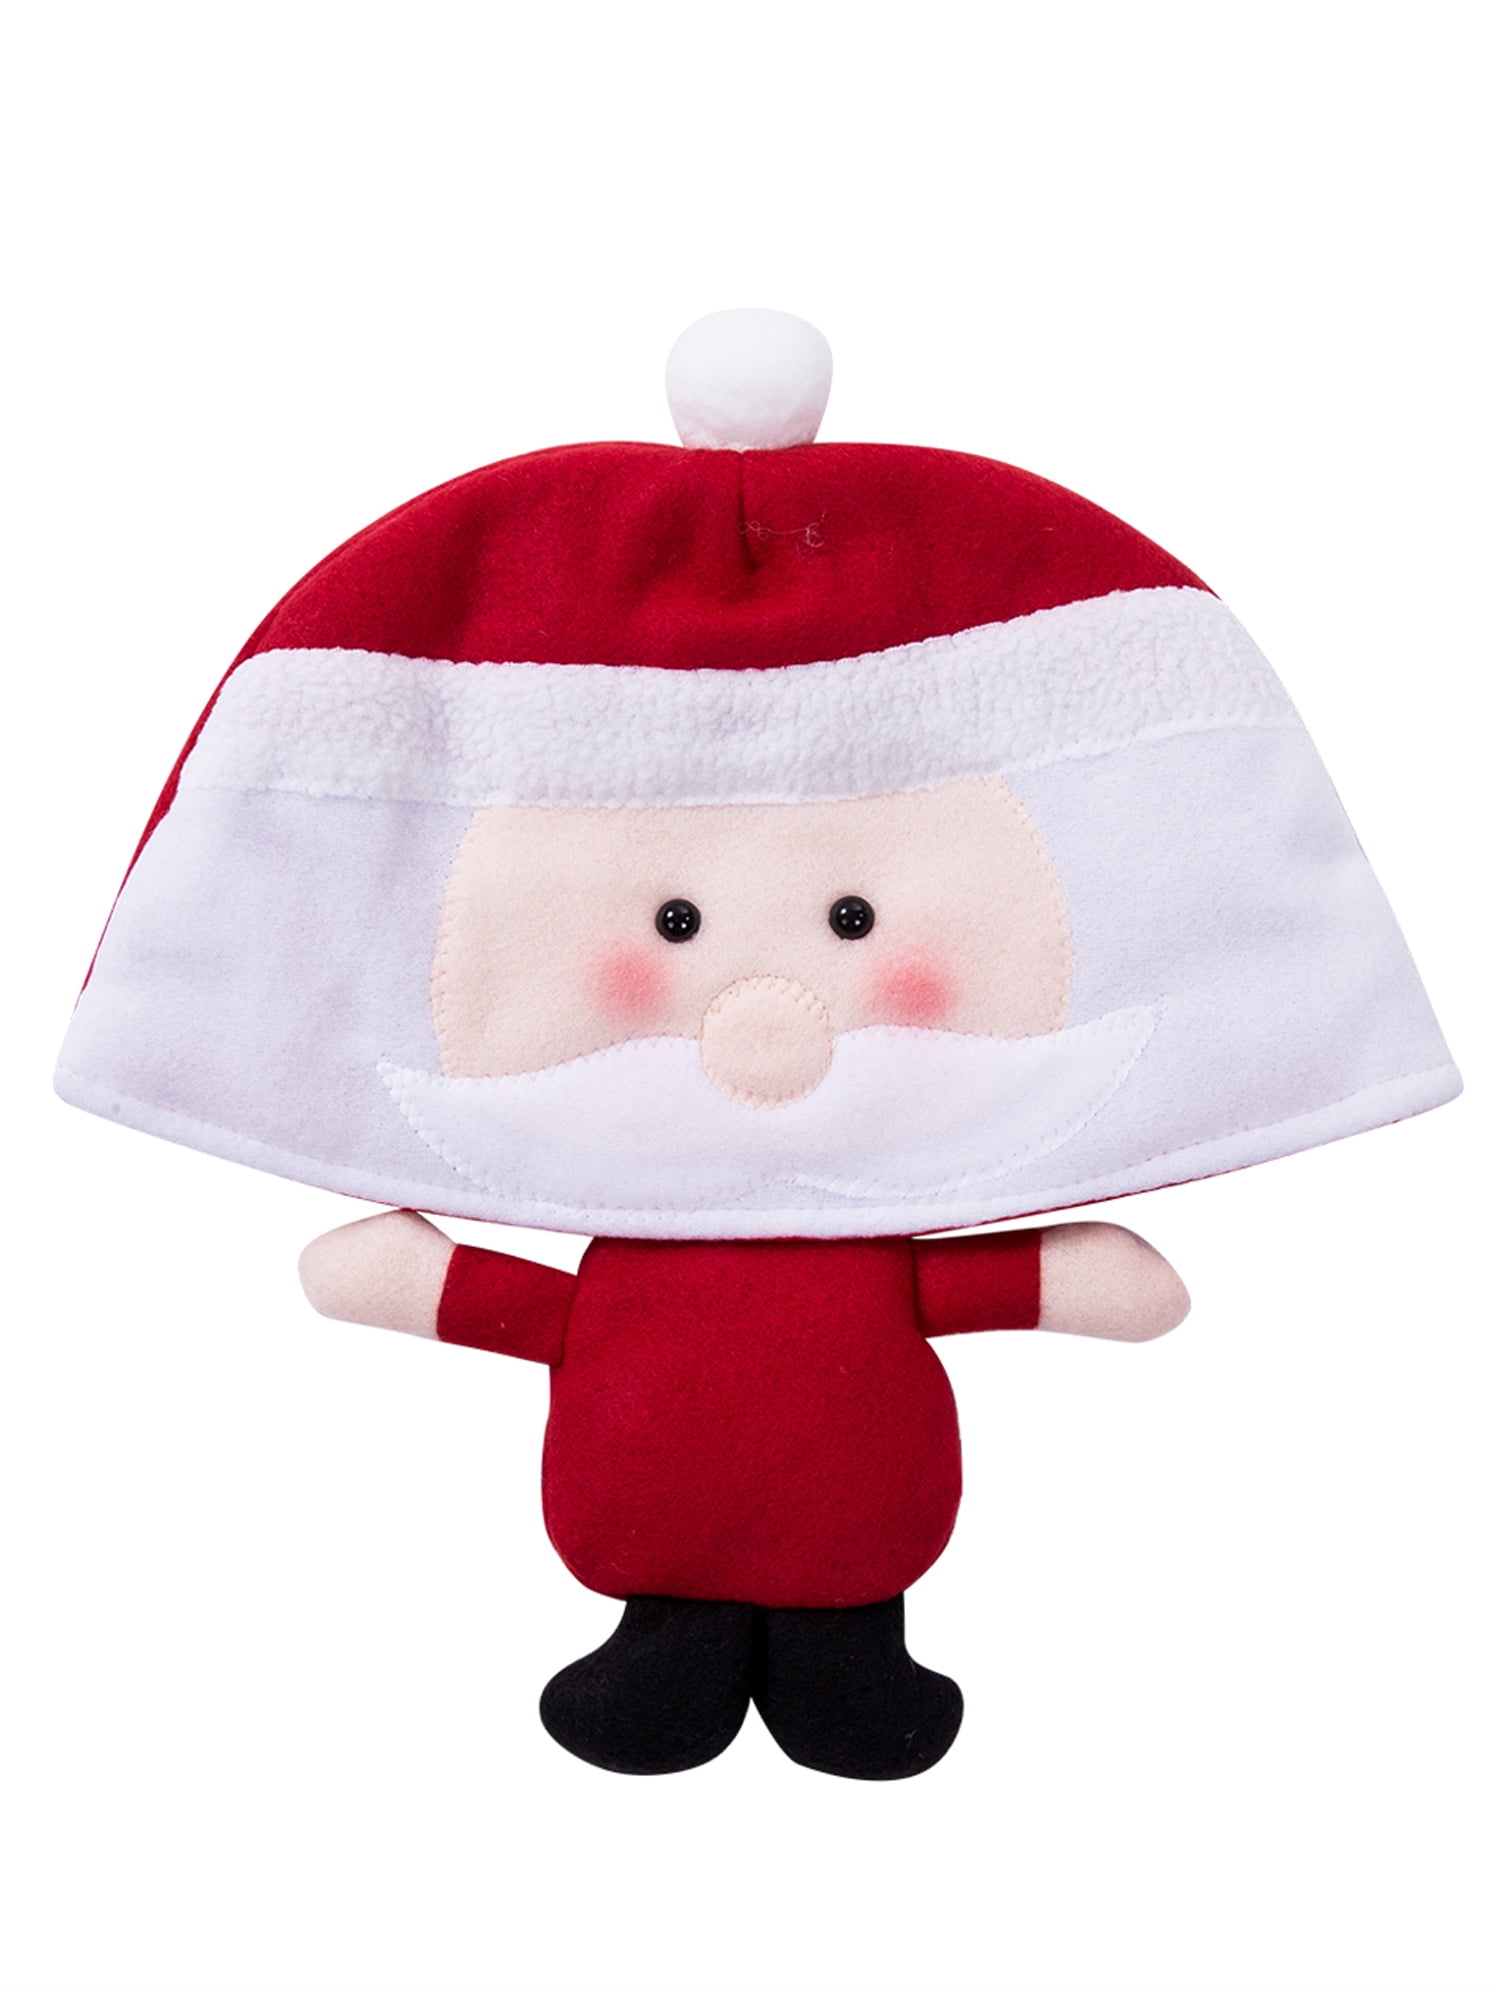 Springcmy Adult Kids Christmas Costume Cap Reindeer Santa Xmas Gift Walmart Com Walmart Com